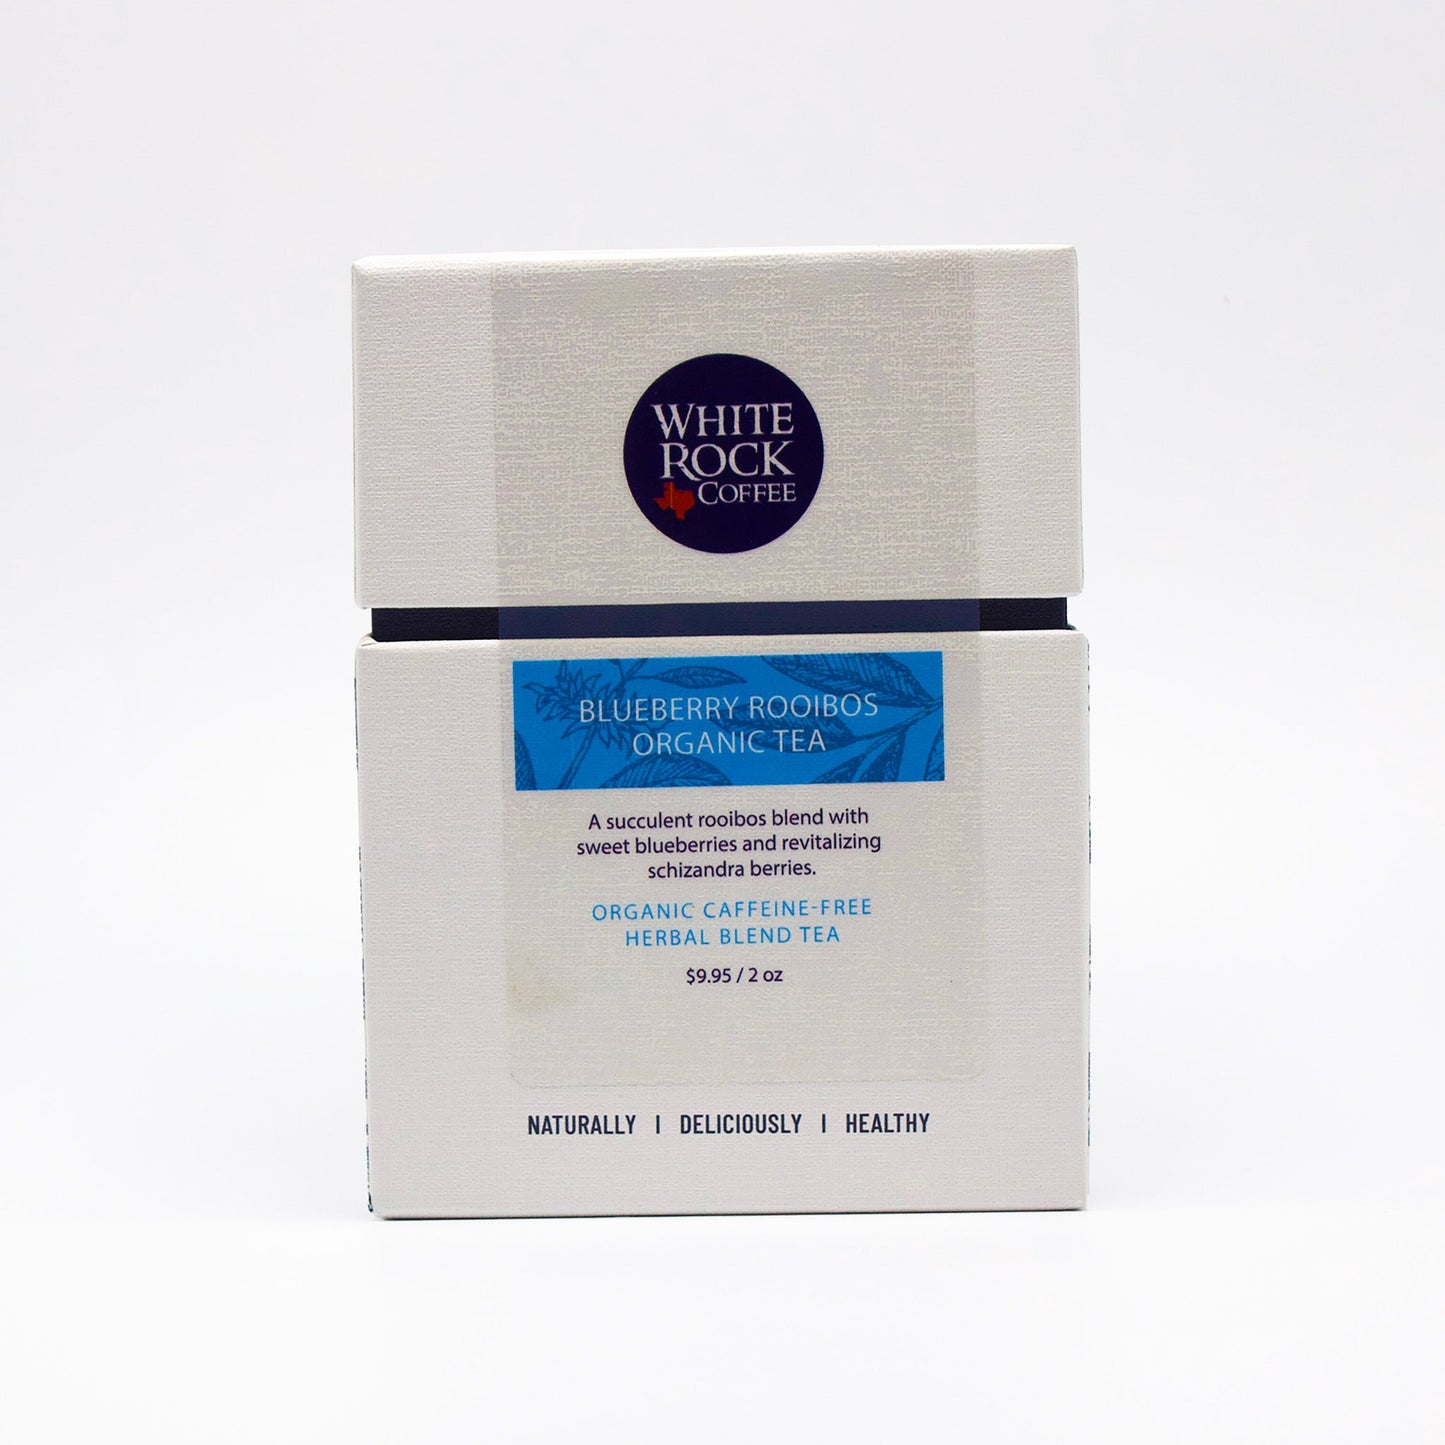 Blueberry Rooibos Organic Tea - White Rock Coffee